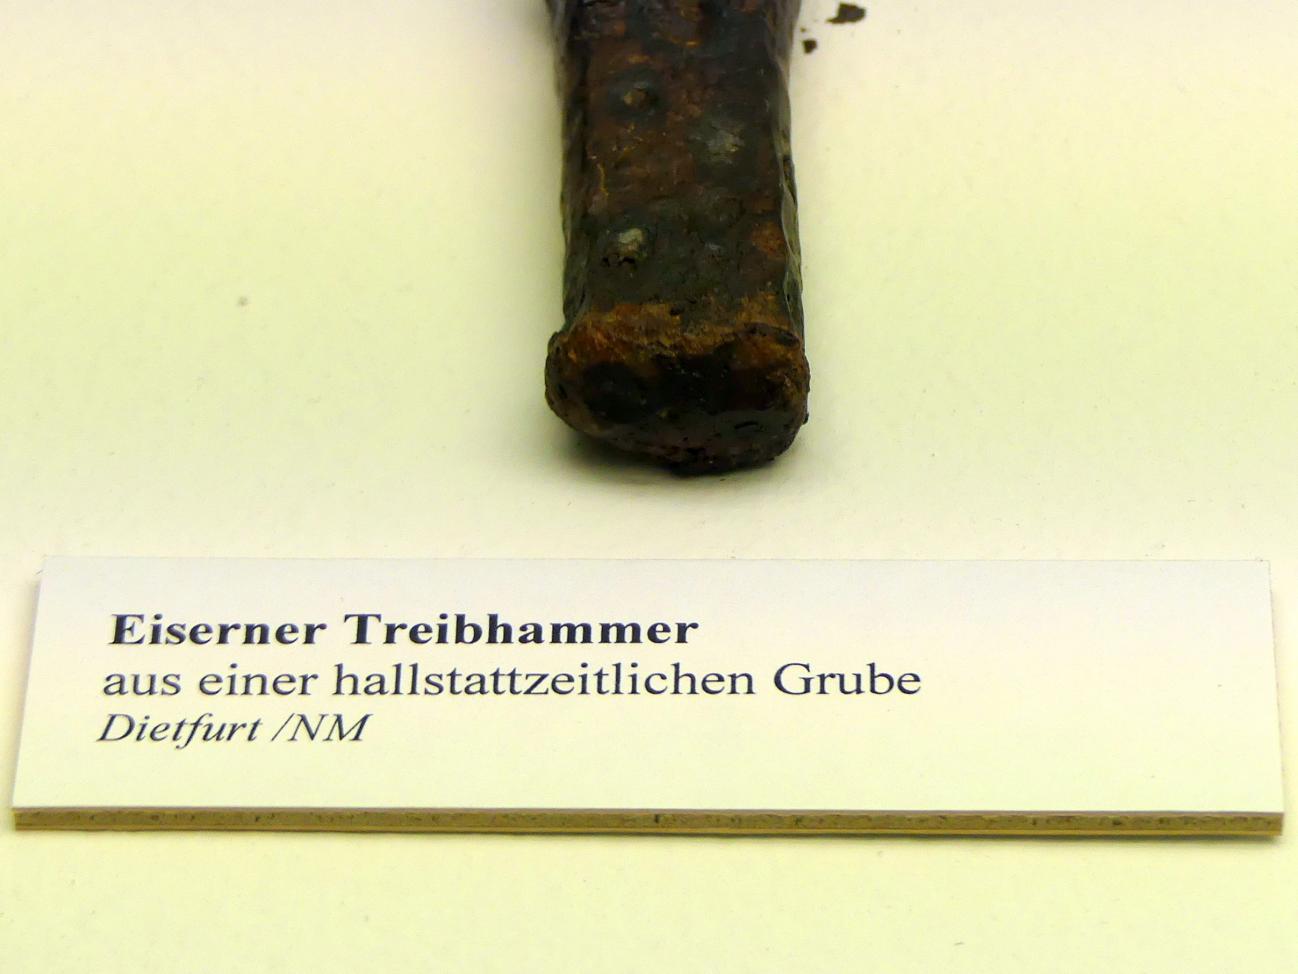 Eiserner Treibhammer, Hallstattzeit, 700 - 200 v. Chr., Bild 2/2